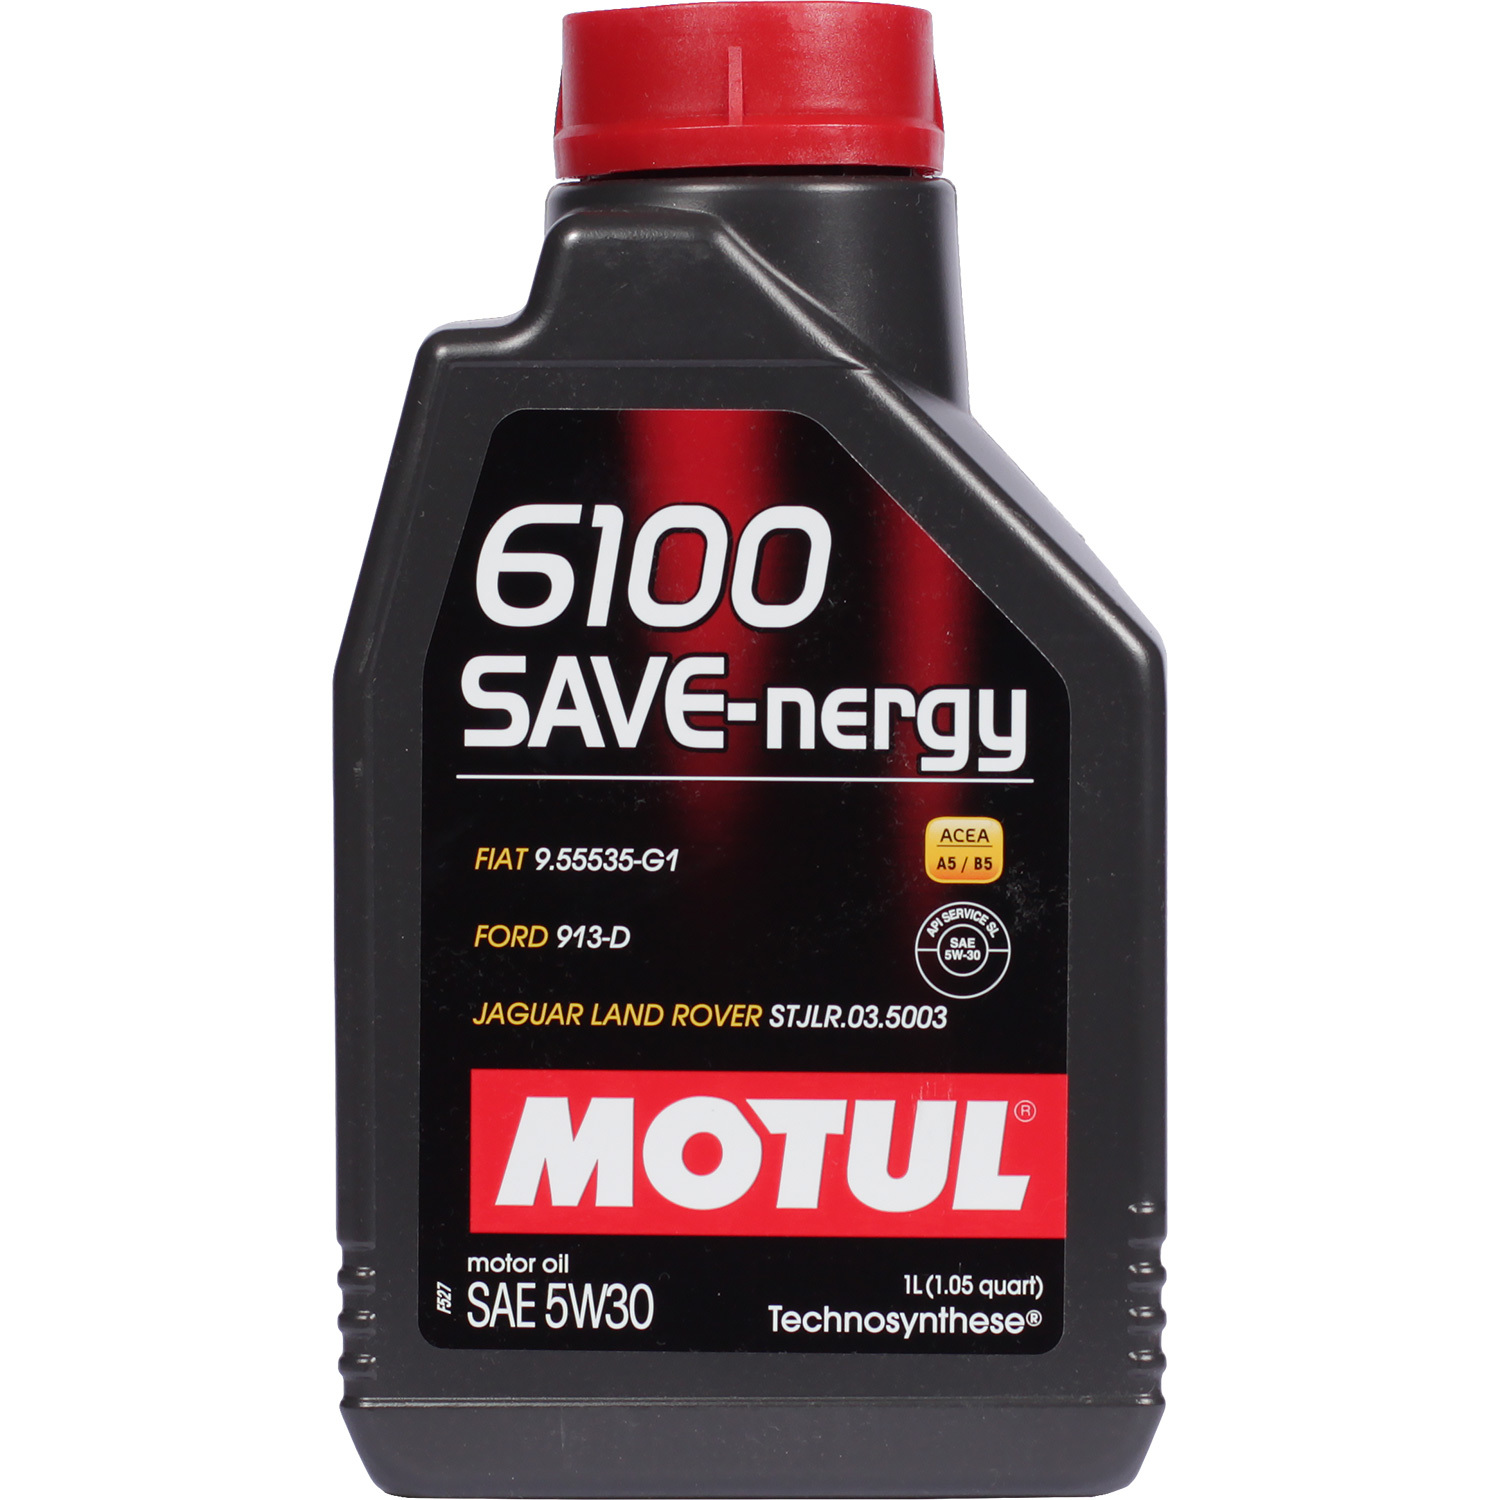 Motul Моторное масло Motul 6100 SAVE-NERGY 5W-30, 1 л motul моторное масло motul 6100 synclean 5w 30 1 л